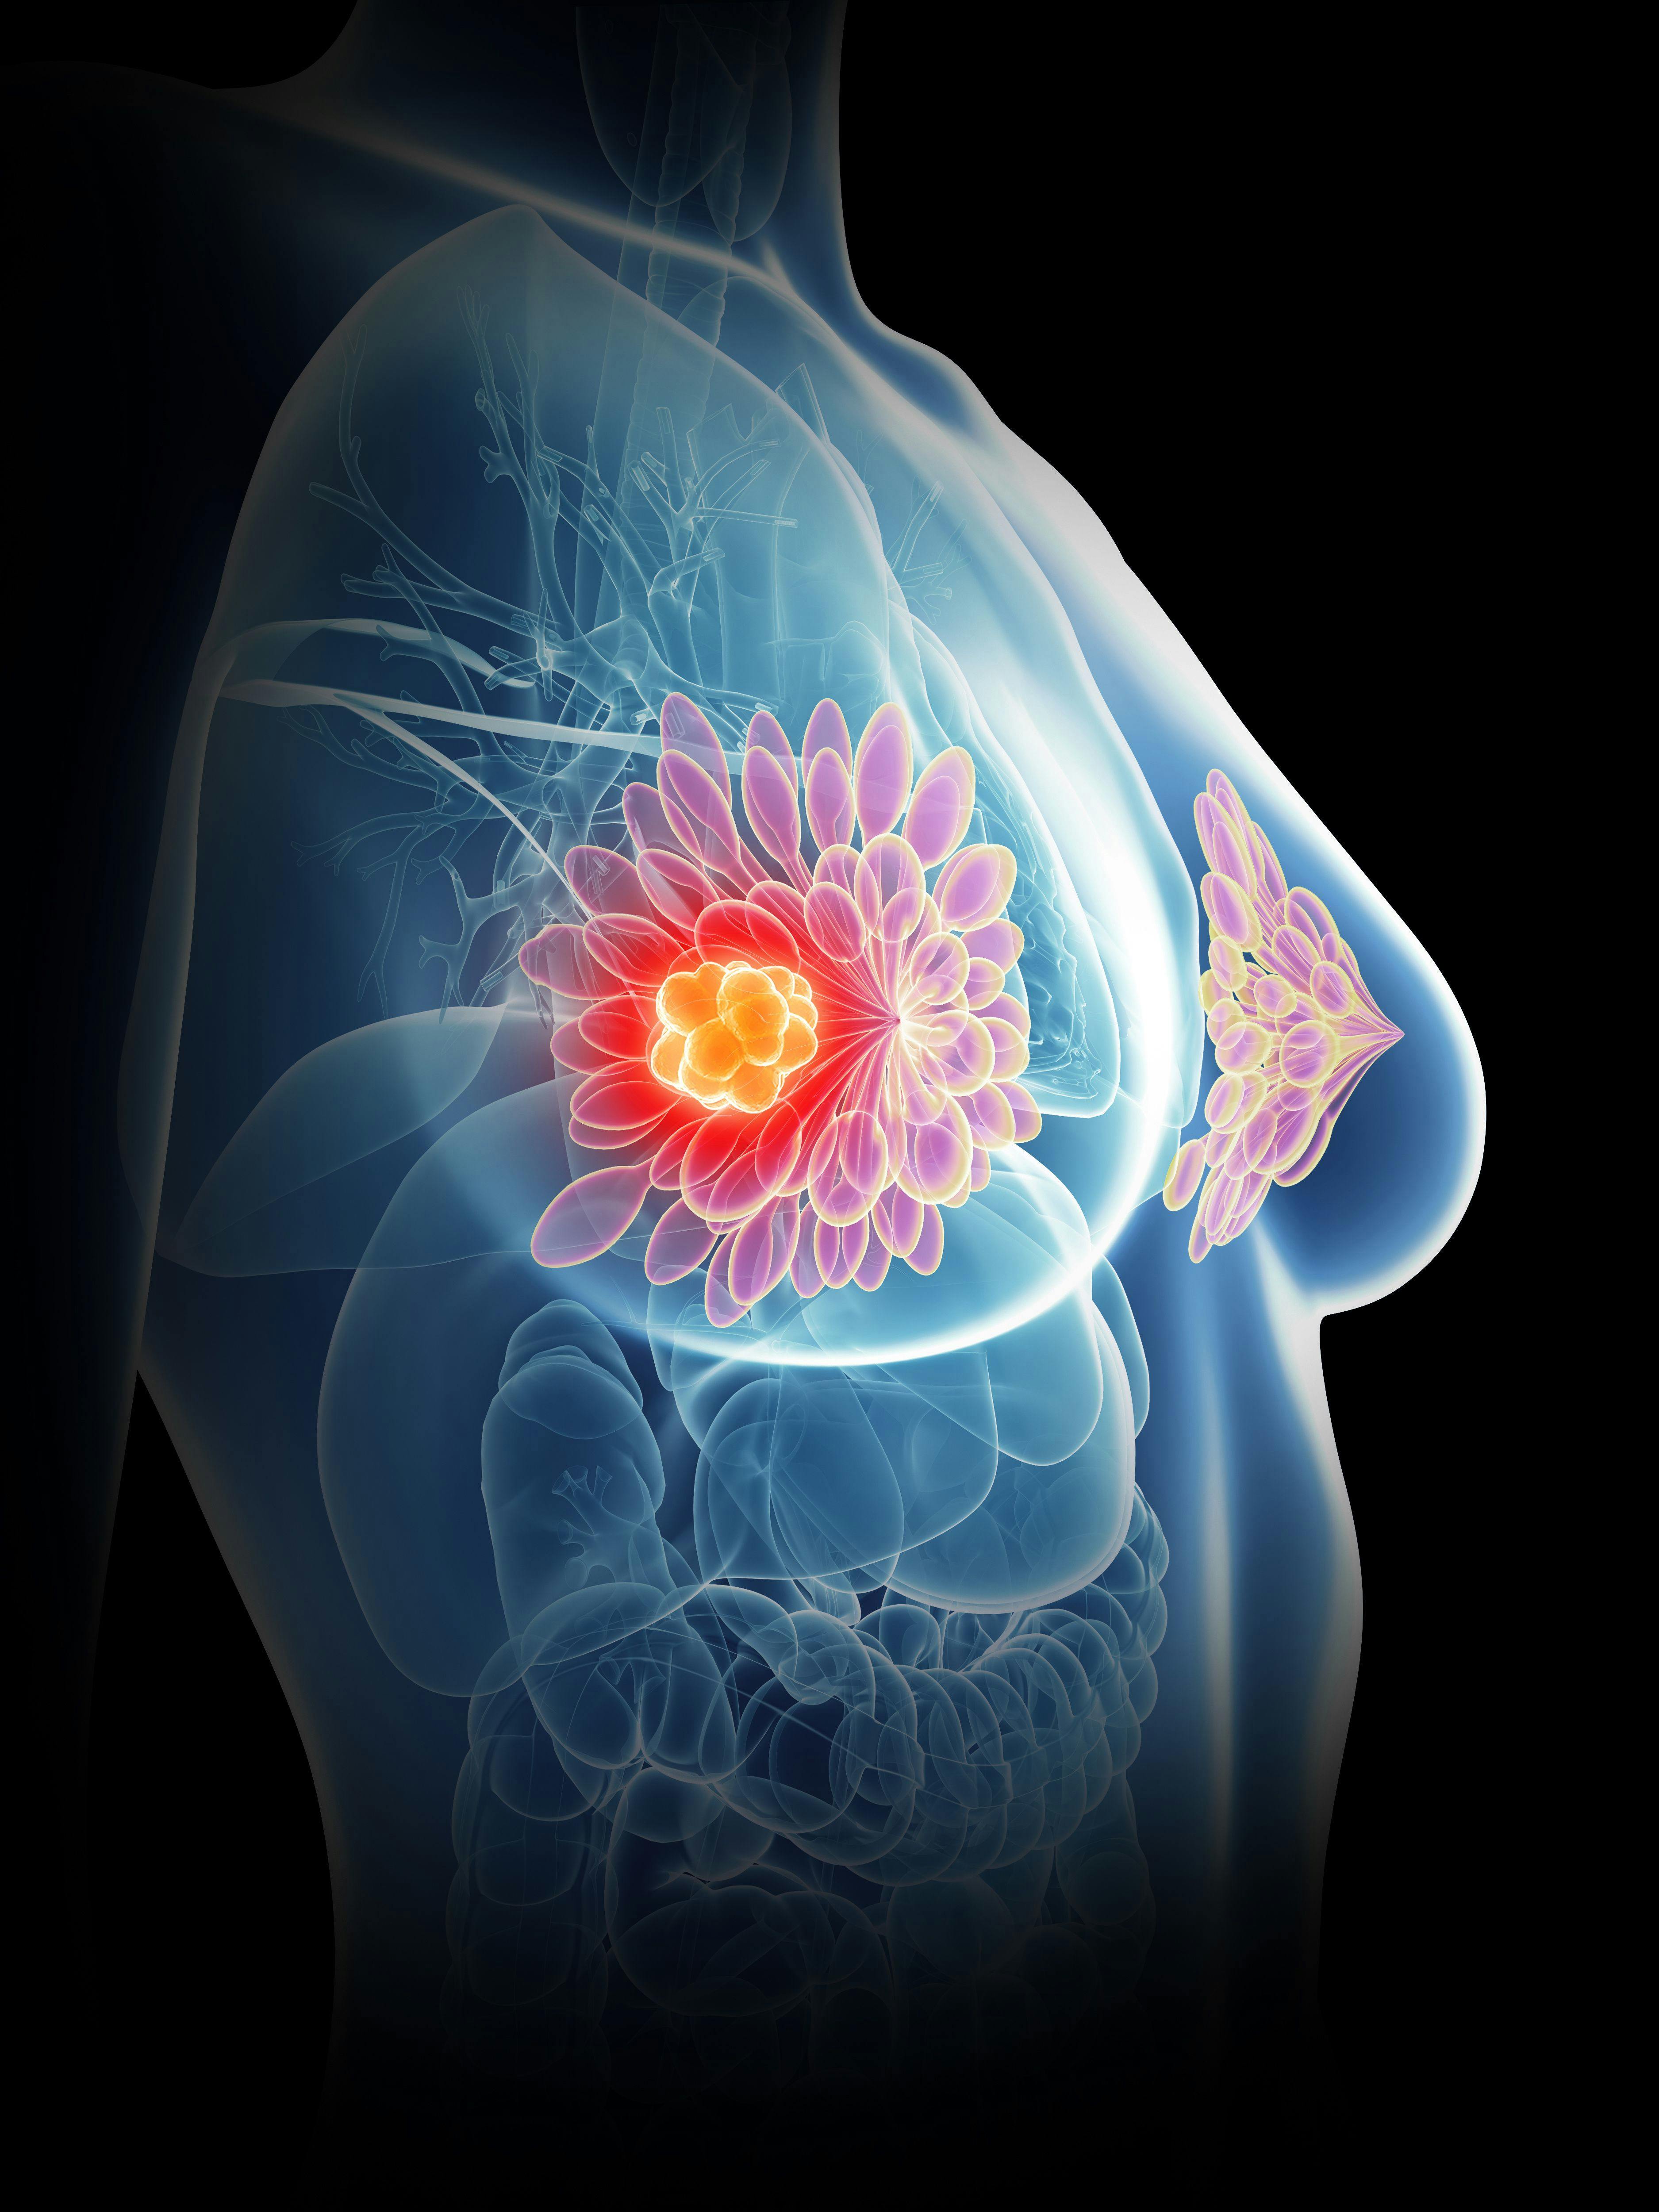 3d image of breast | Image credit: © SciePro stock.adobe.com 